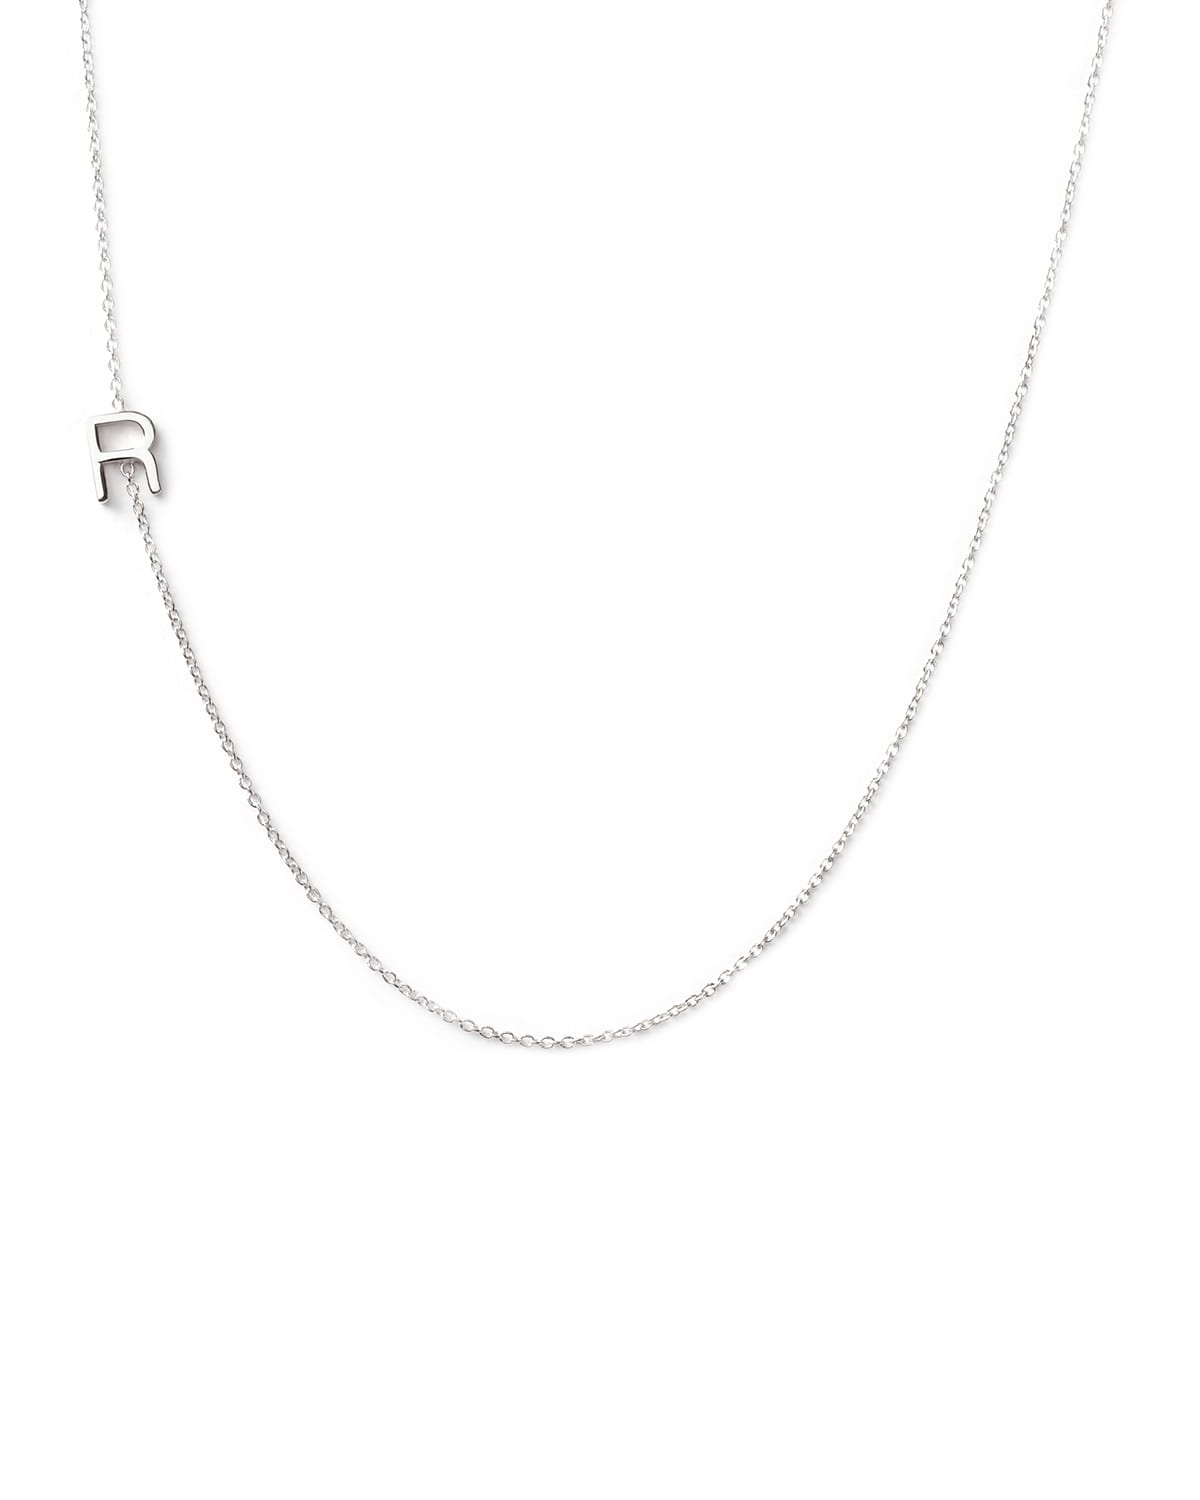 Maya Brenner Designs 14k White Gold Mini Letter Necklace In R